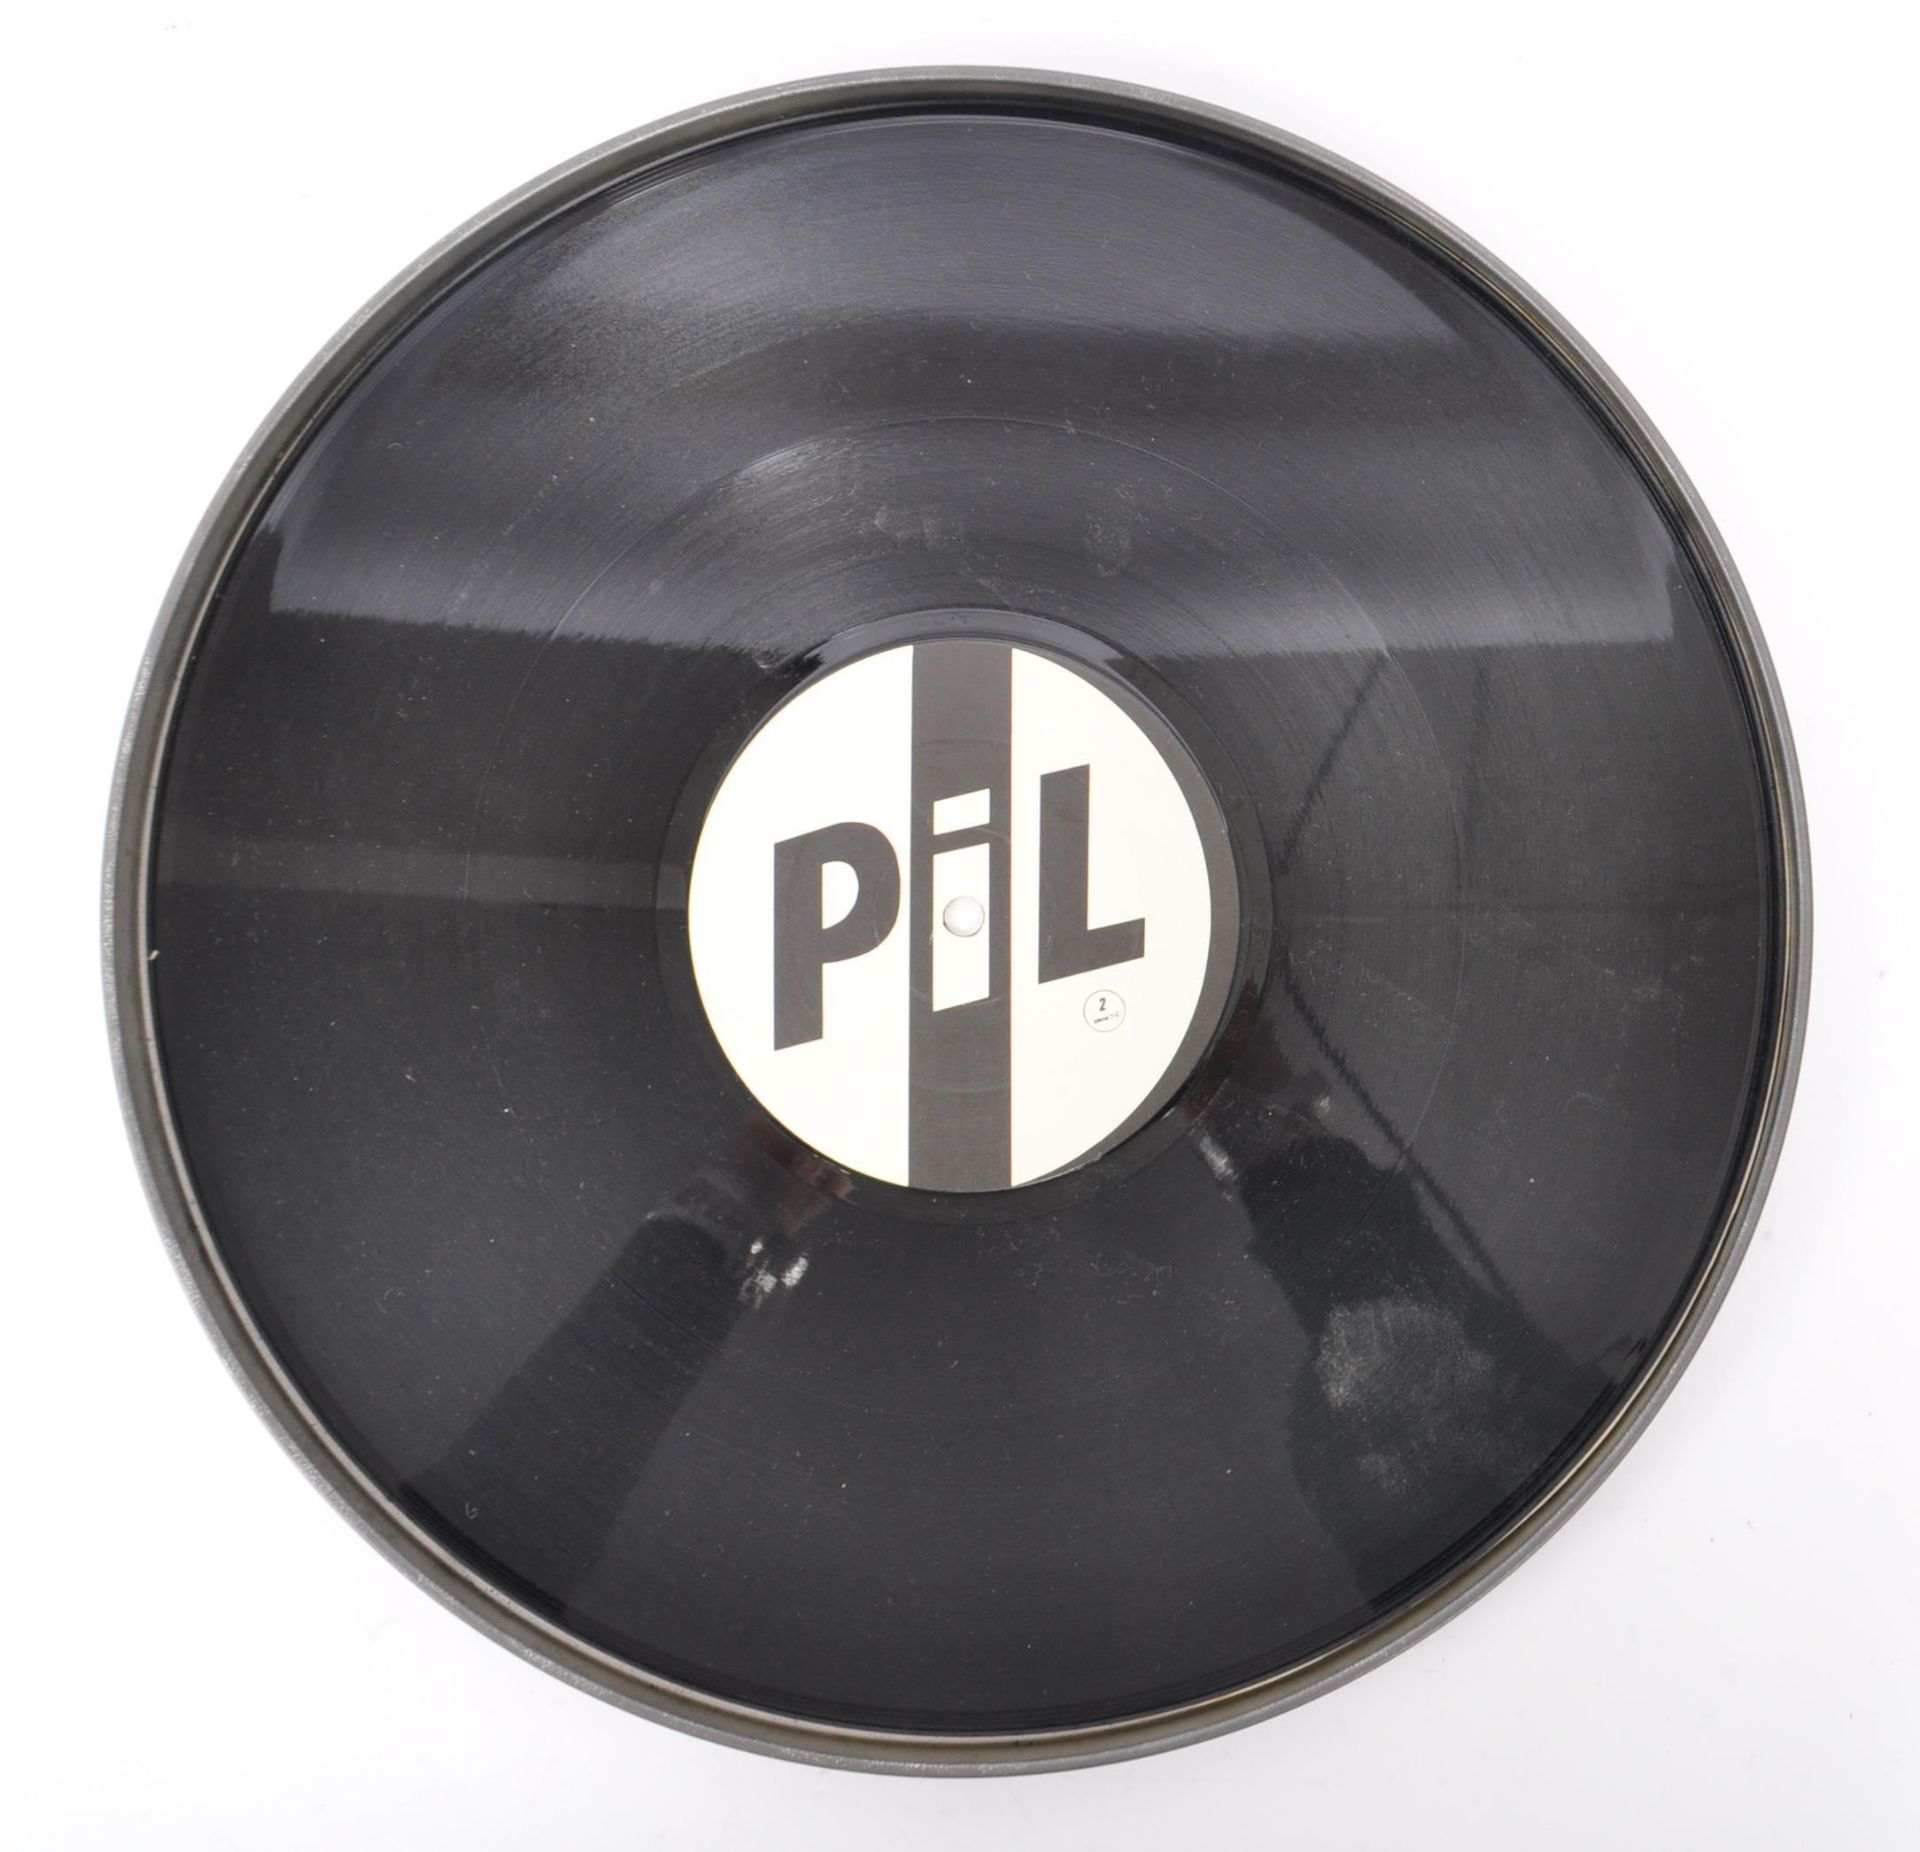 PUBLIC IMAGE LIMITED LTD / JOHN LYDON PIL 33 RPM LP VINYL RECORD / CD - Image 4 of 4